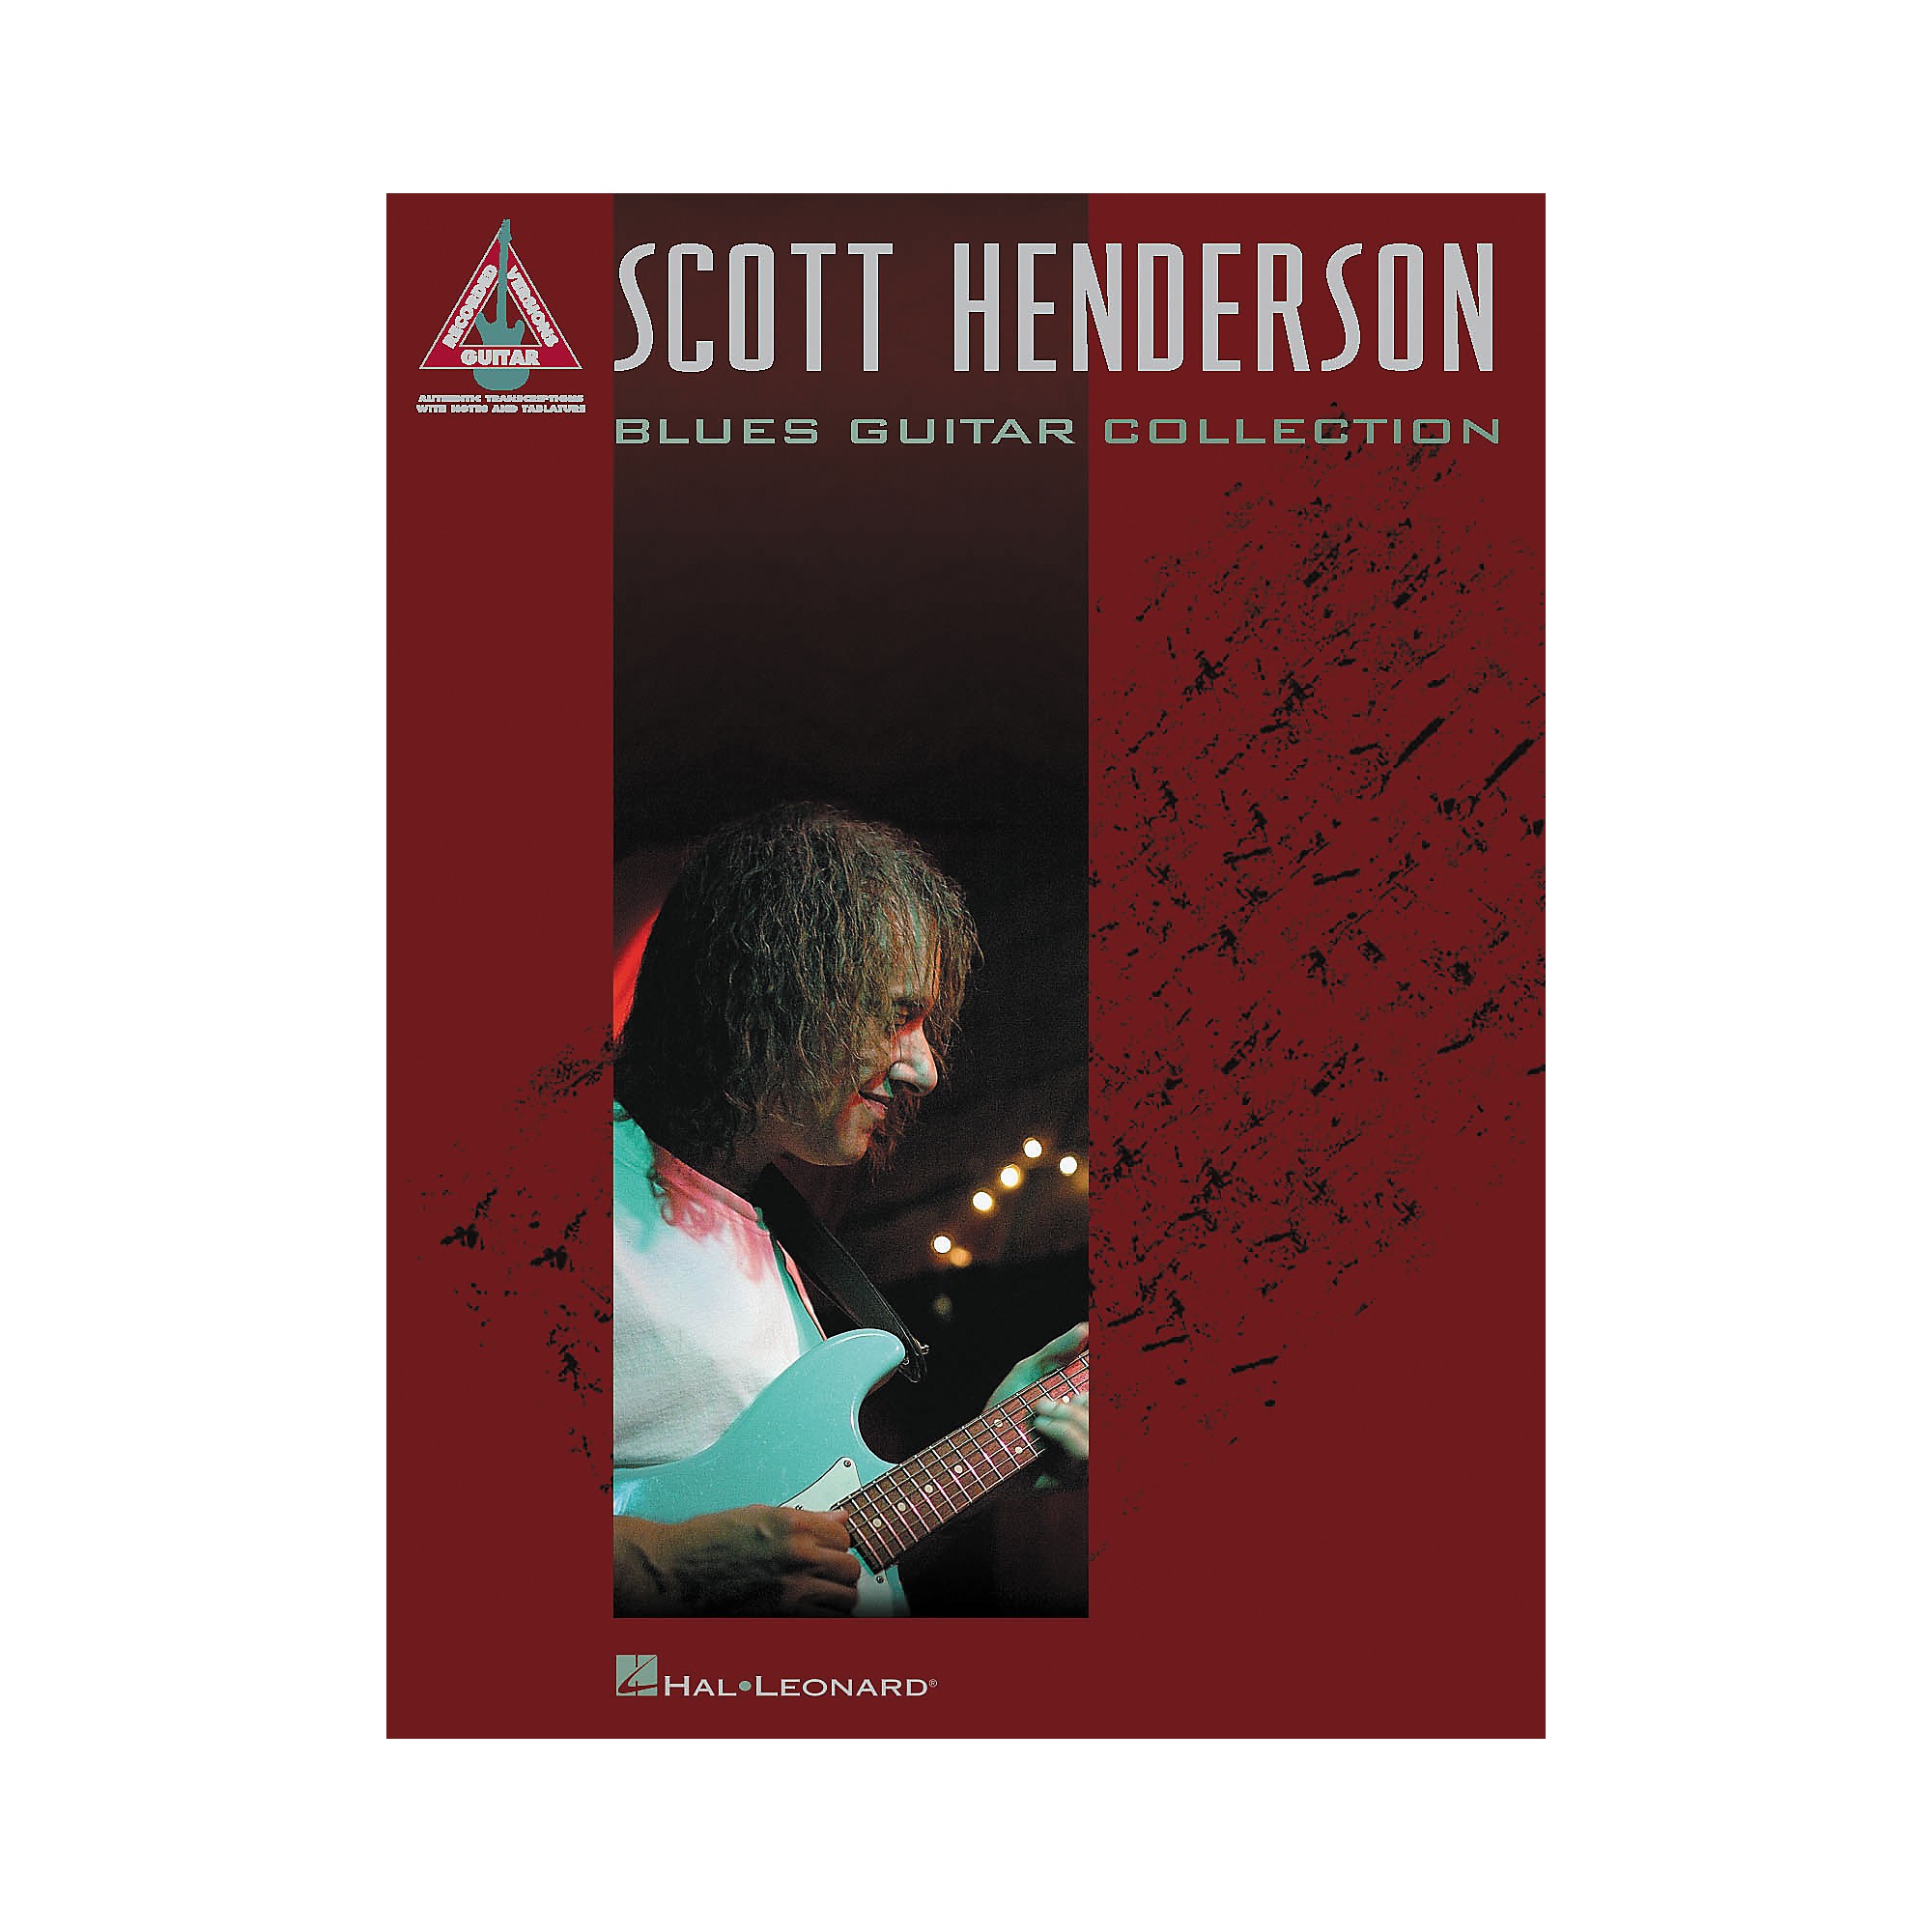 scott henderson blues guitar collection rar